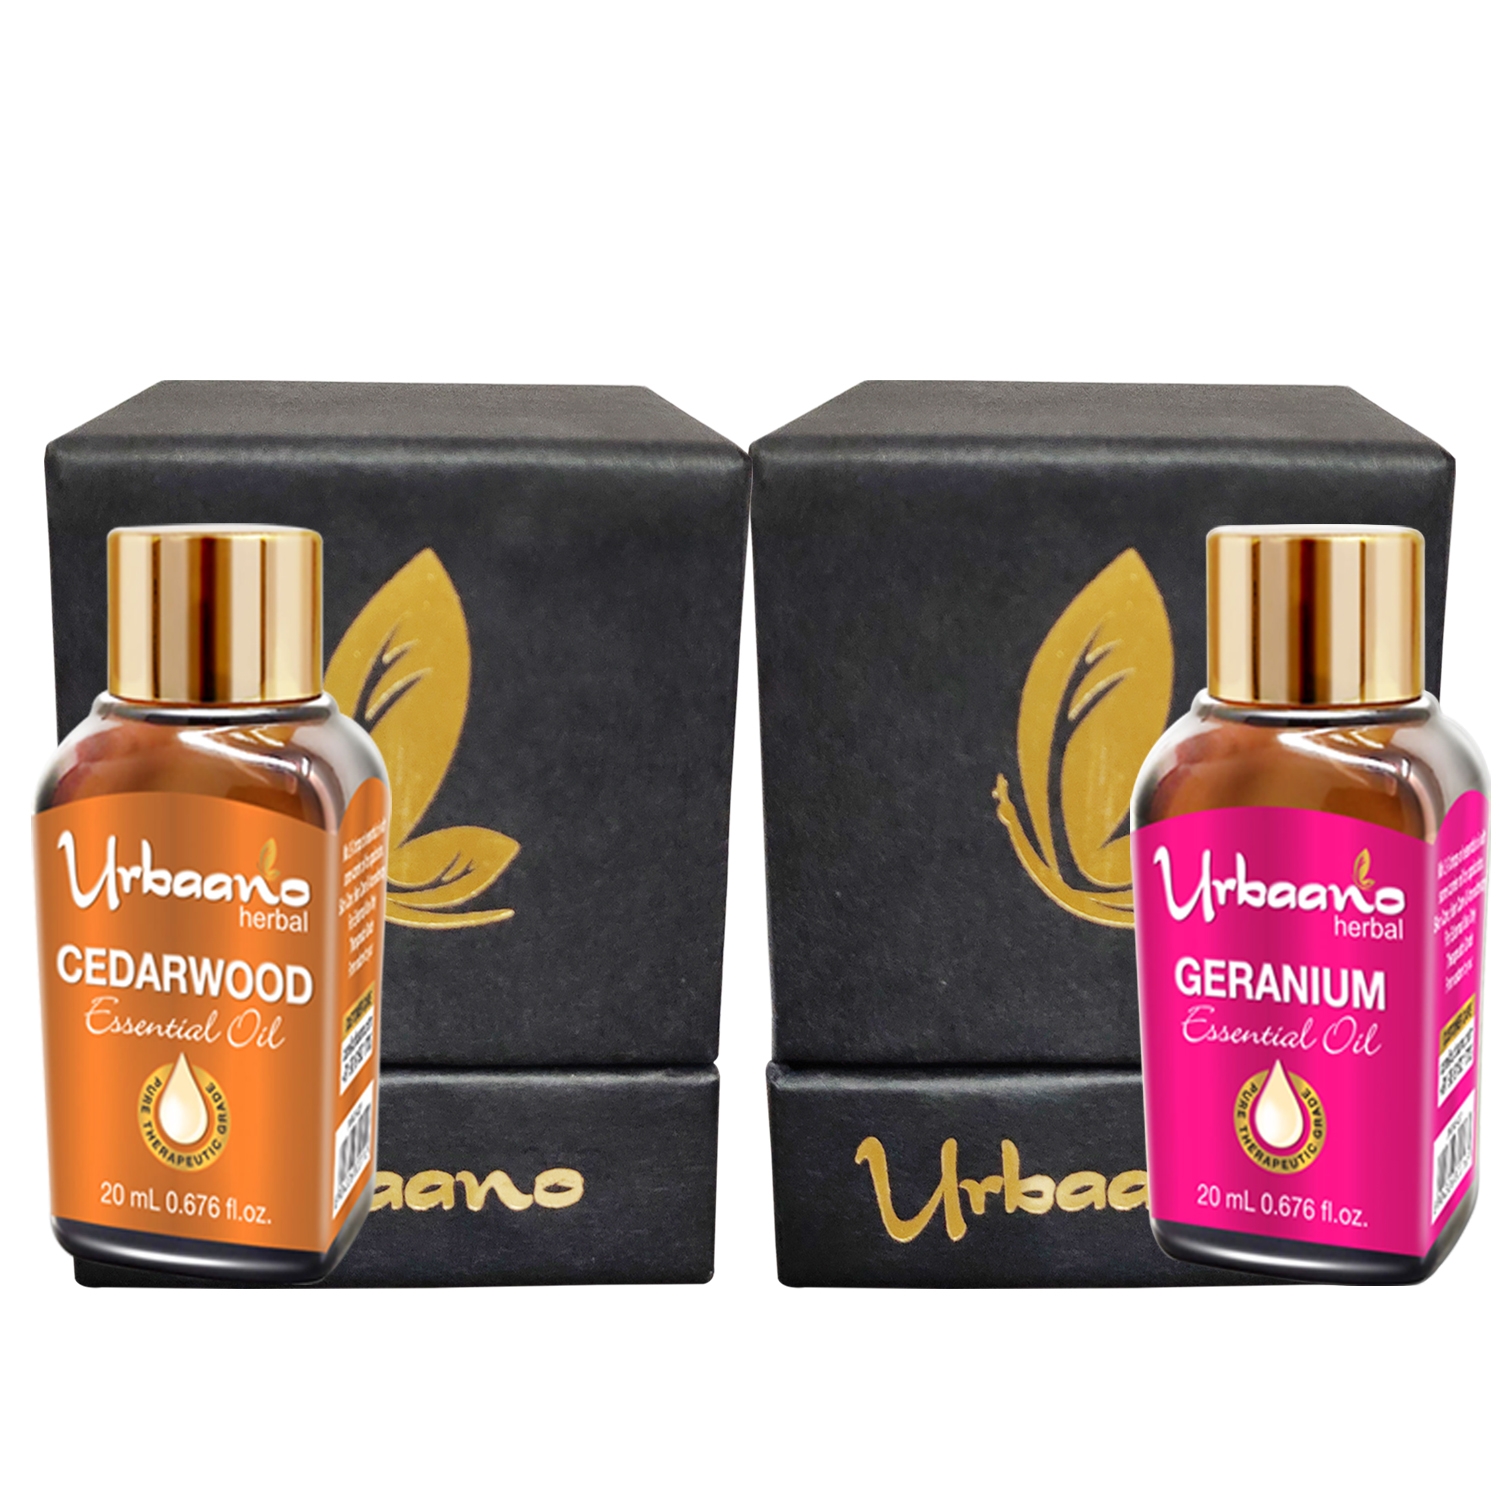 Urbaano Herbal | Urbaano Herbal Geranium & Cedarwood Essential Oil 20ml each for Hair, Skin & Aromatherapy - 100% Undiluted Therapeutic Grade